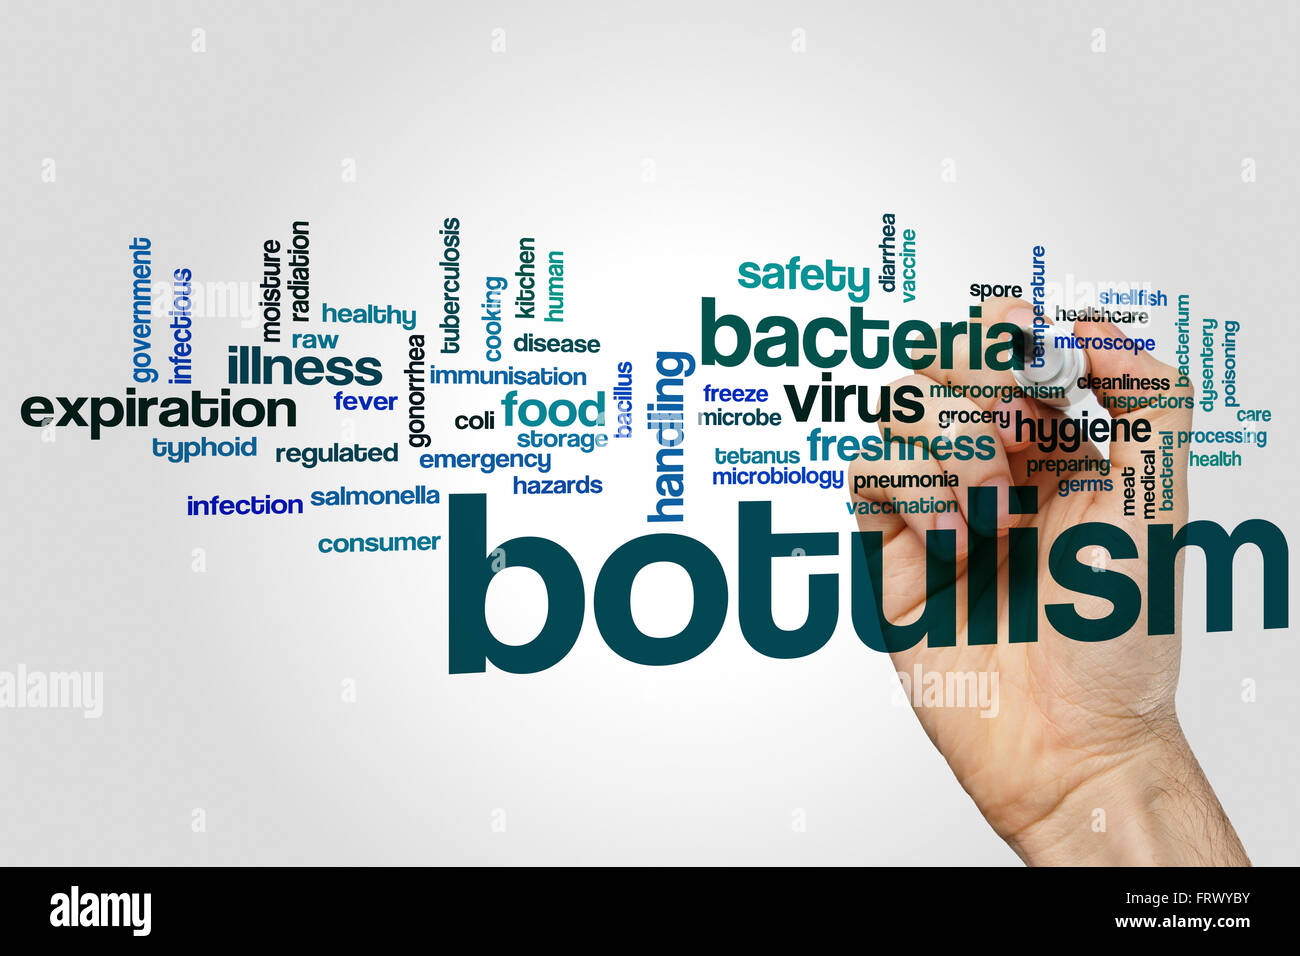 Botulism word cloud concept Stock Photo